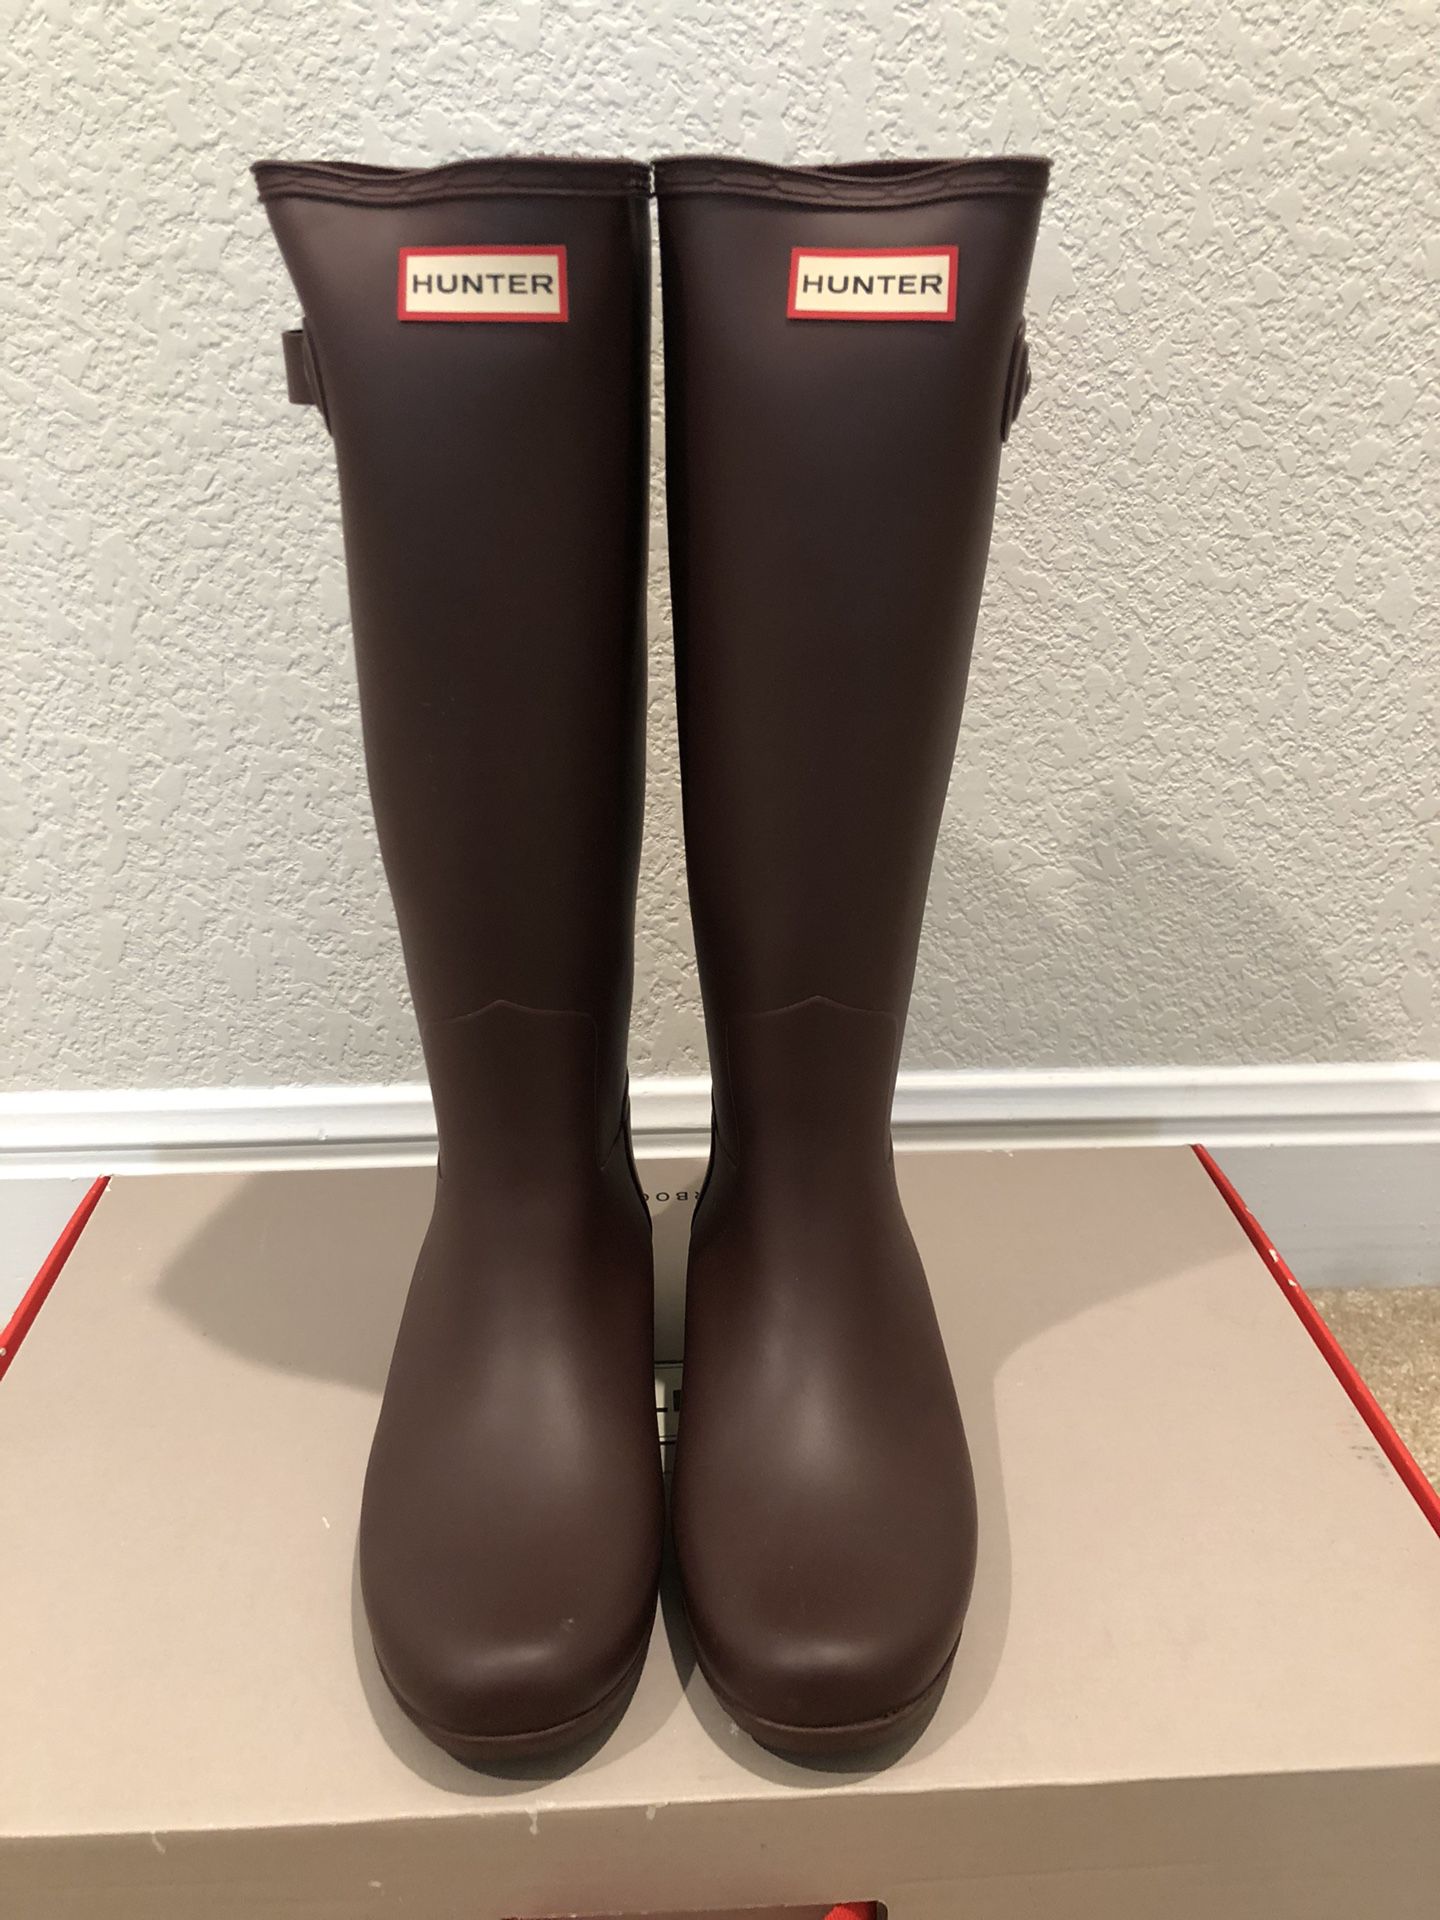 Hunter Original Rain Boots (TALL) - Women’s Size 6 - Burgundy (Box included)